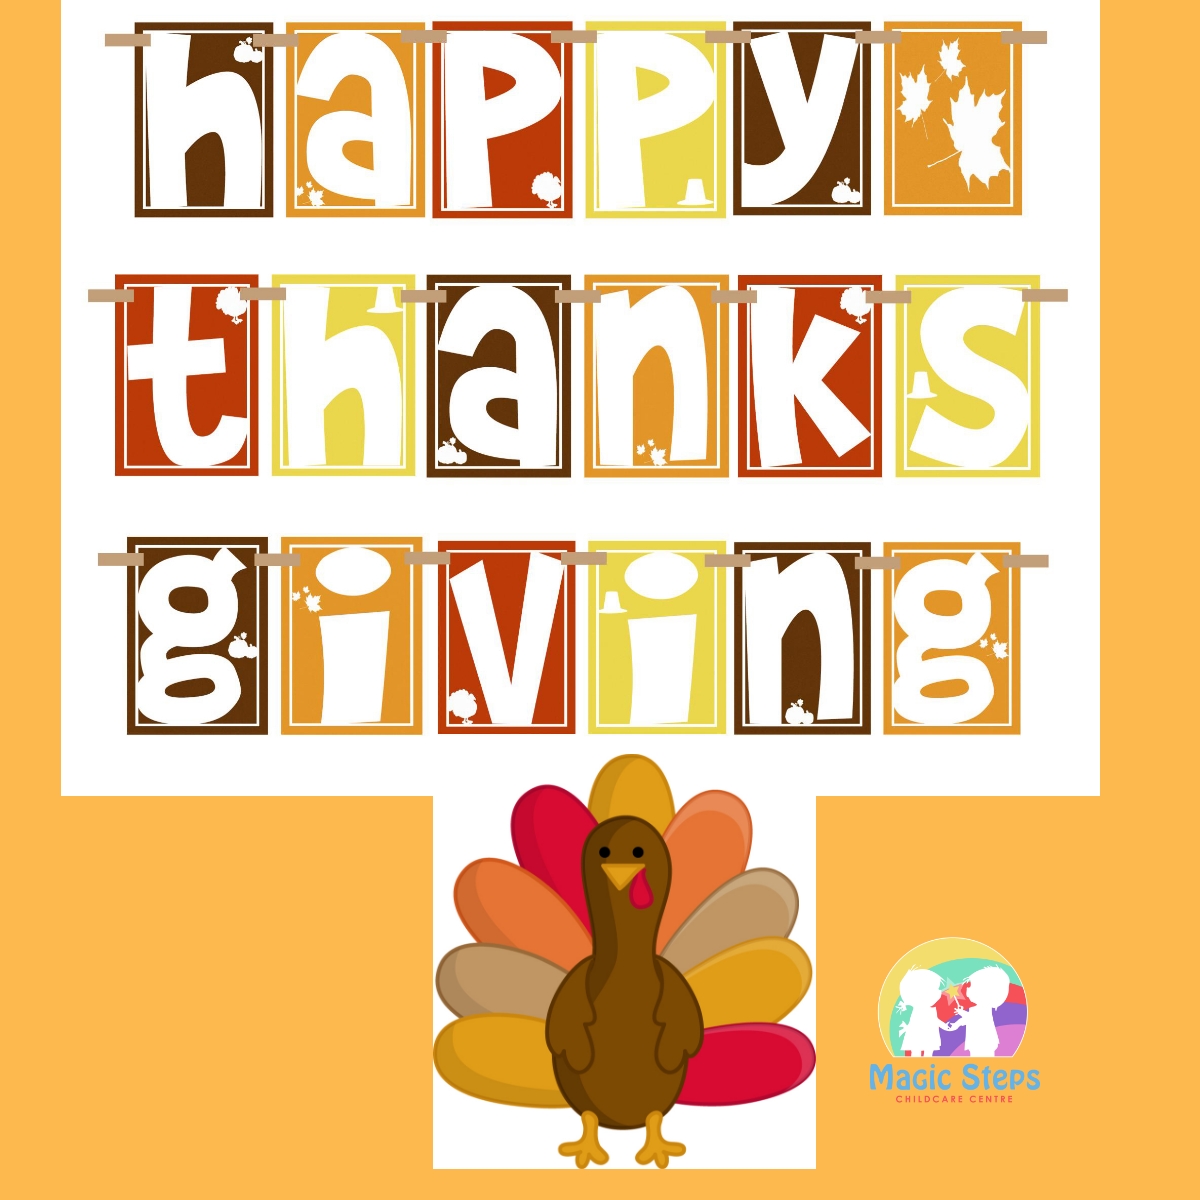 Thanksgiving Day- Thursday 25th November